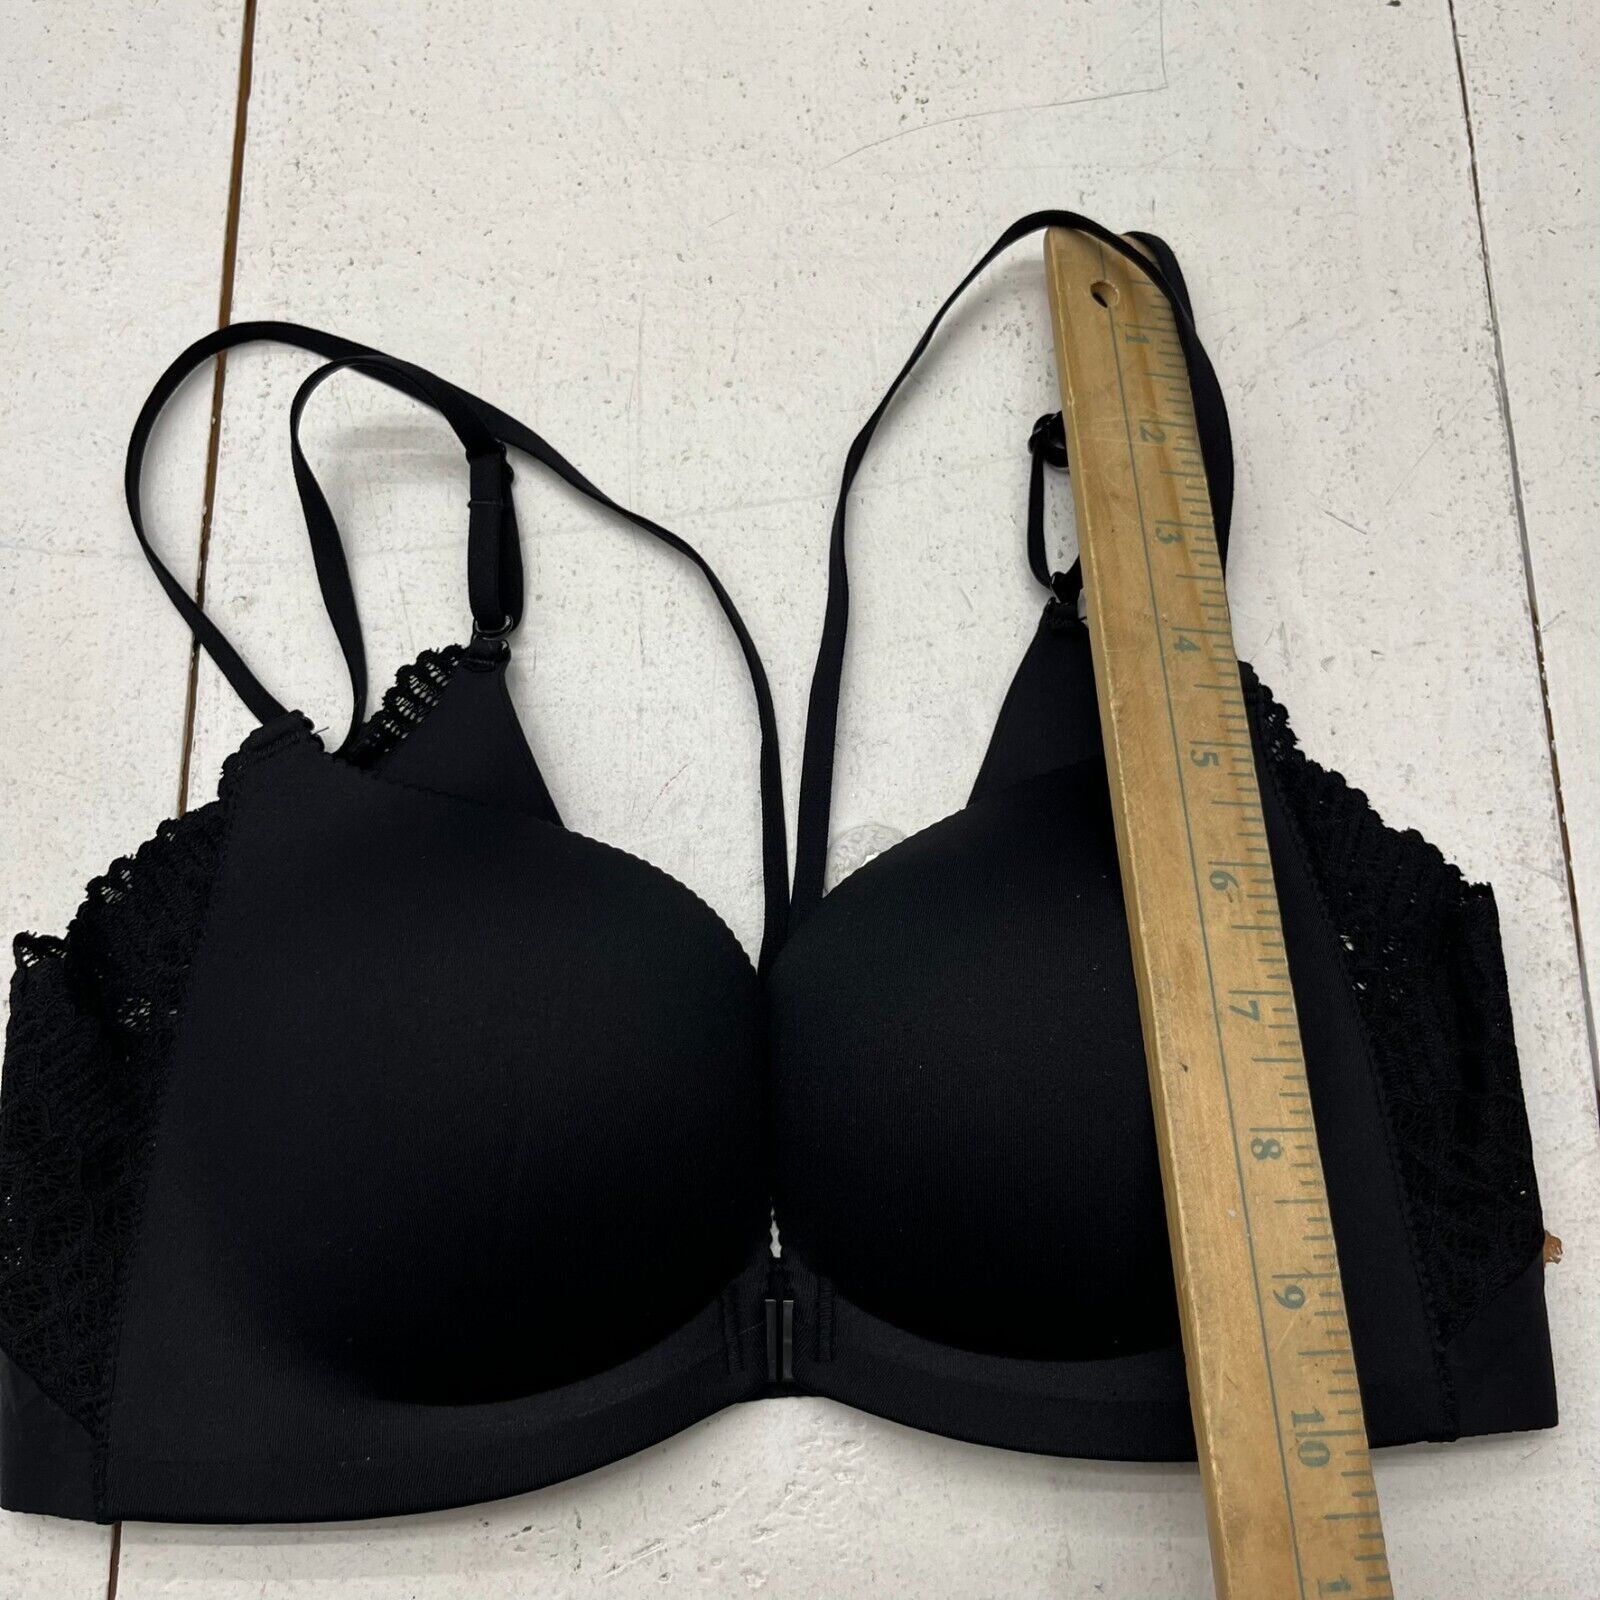 Kbras Black Lace Front Clasp Bra Women's Size 34/75 NEW - beyond exchange